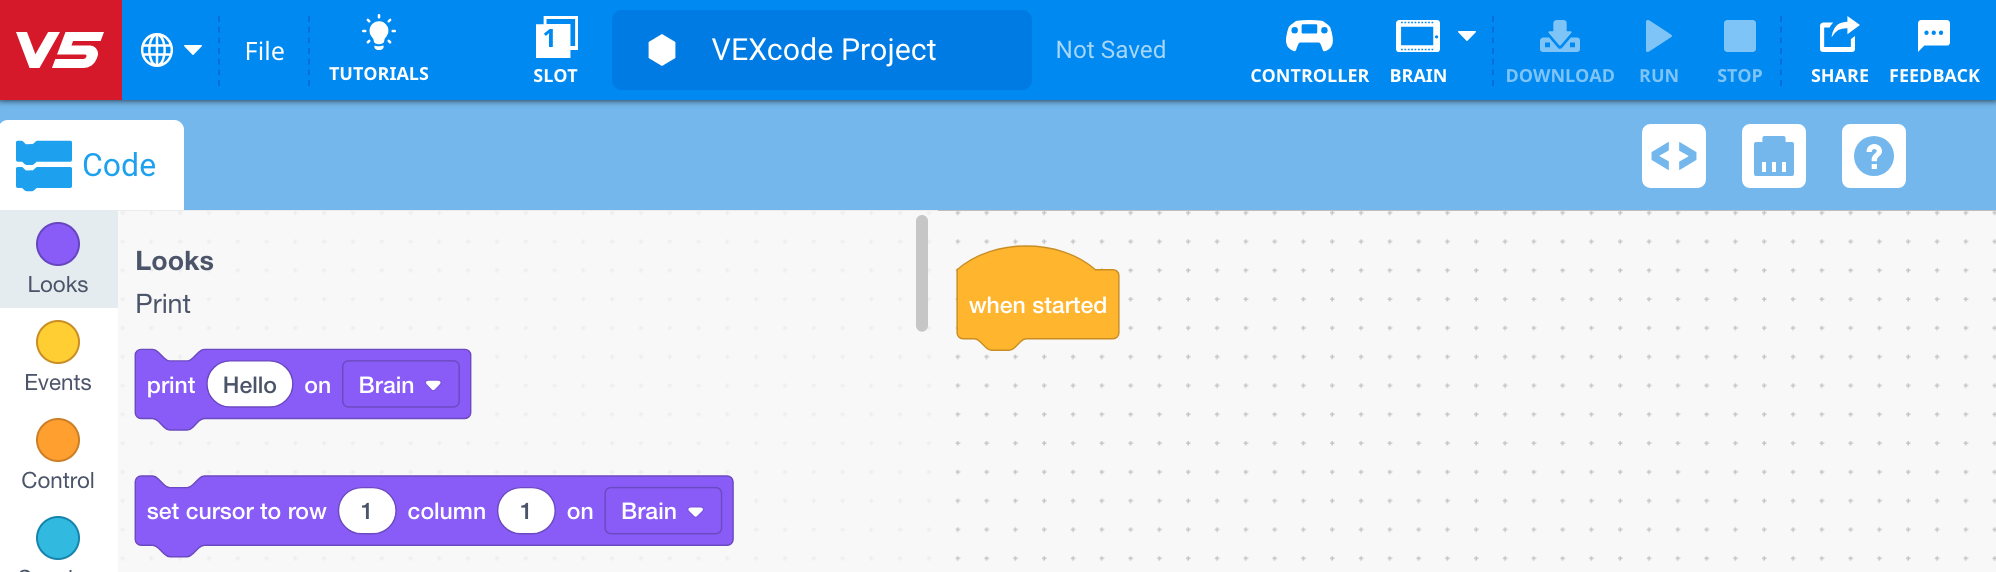 启动 VEXcode V5